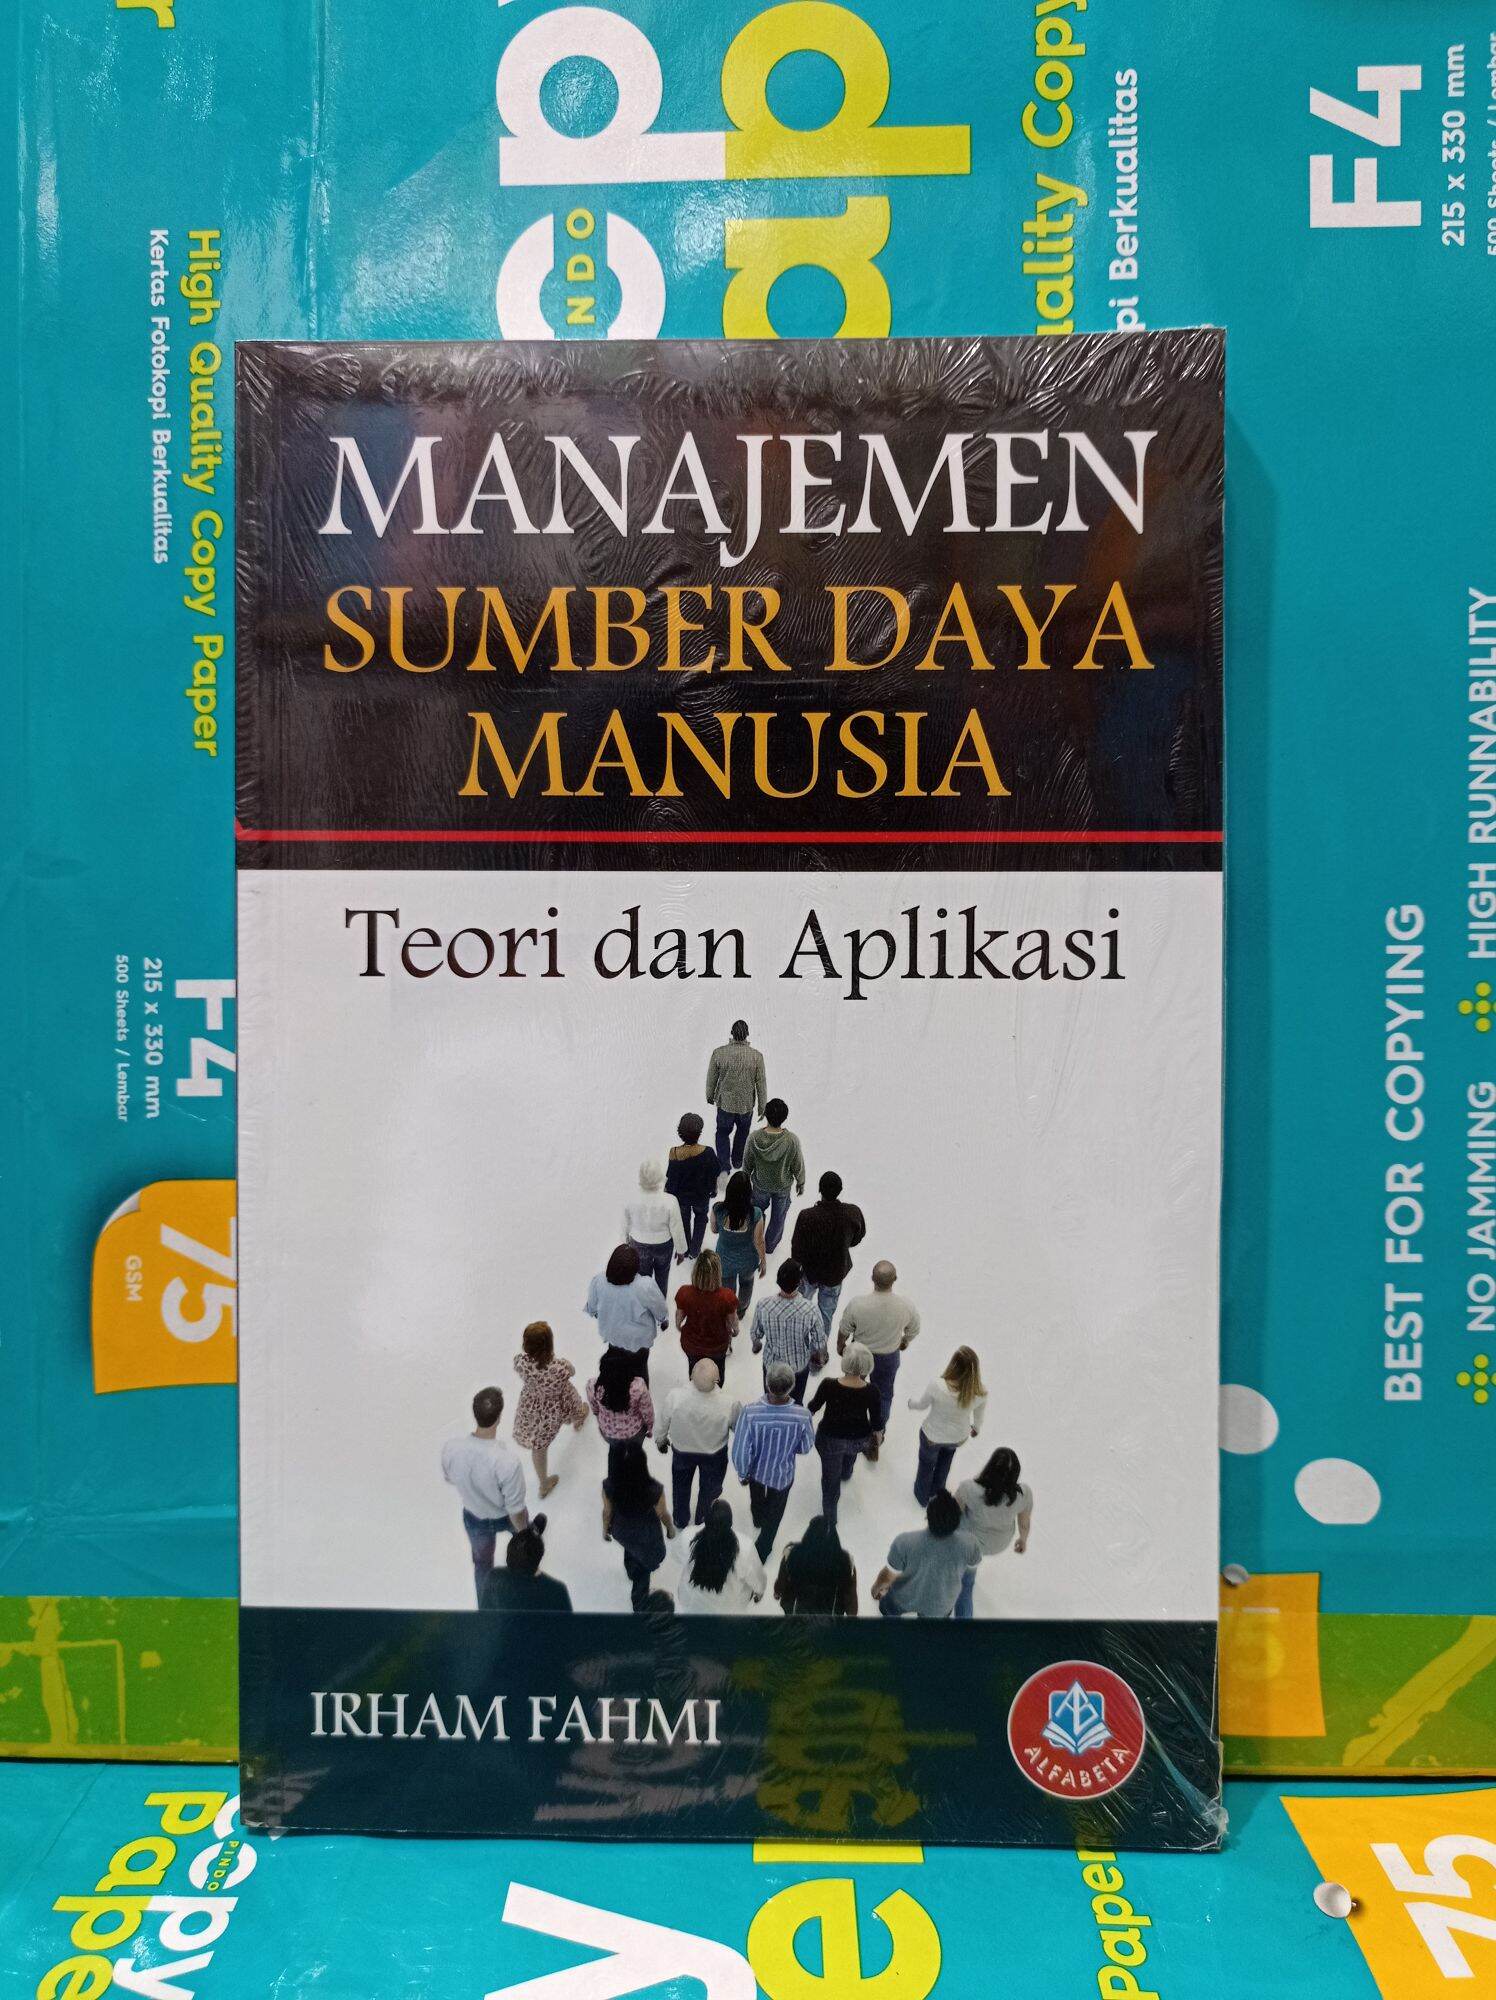 Buku Manajemen Sumber Daya Manusia Teori Dan Aplikasi By Irham Fahmi